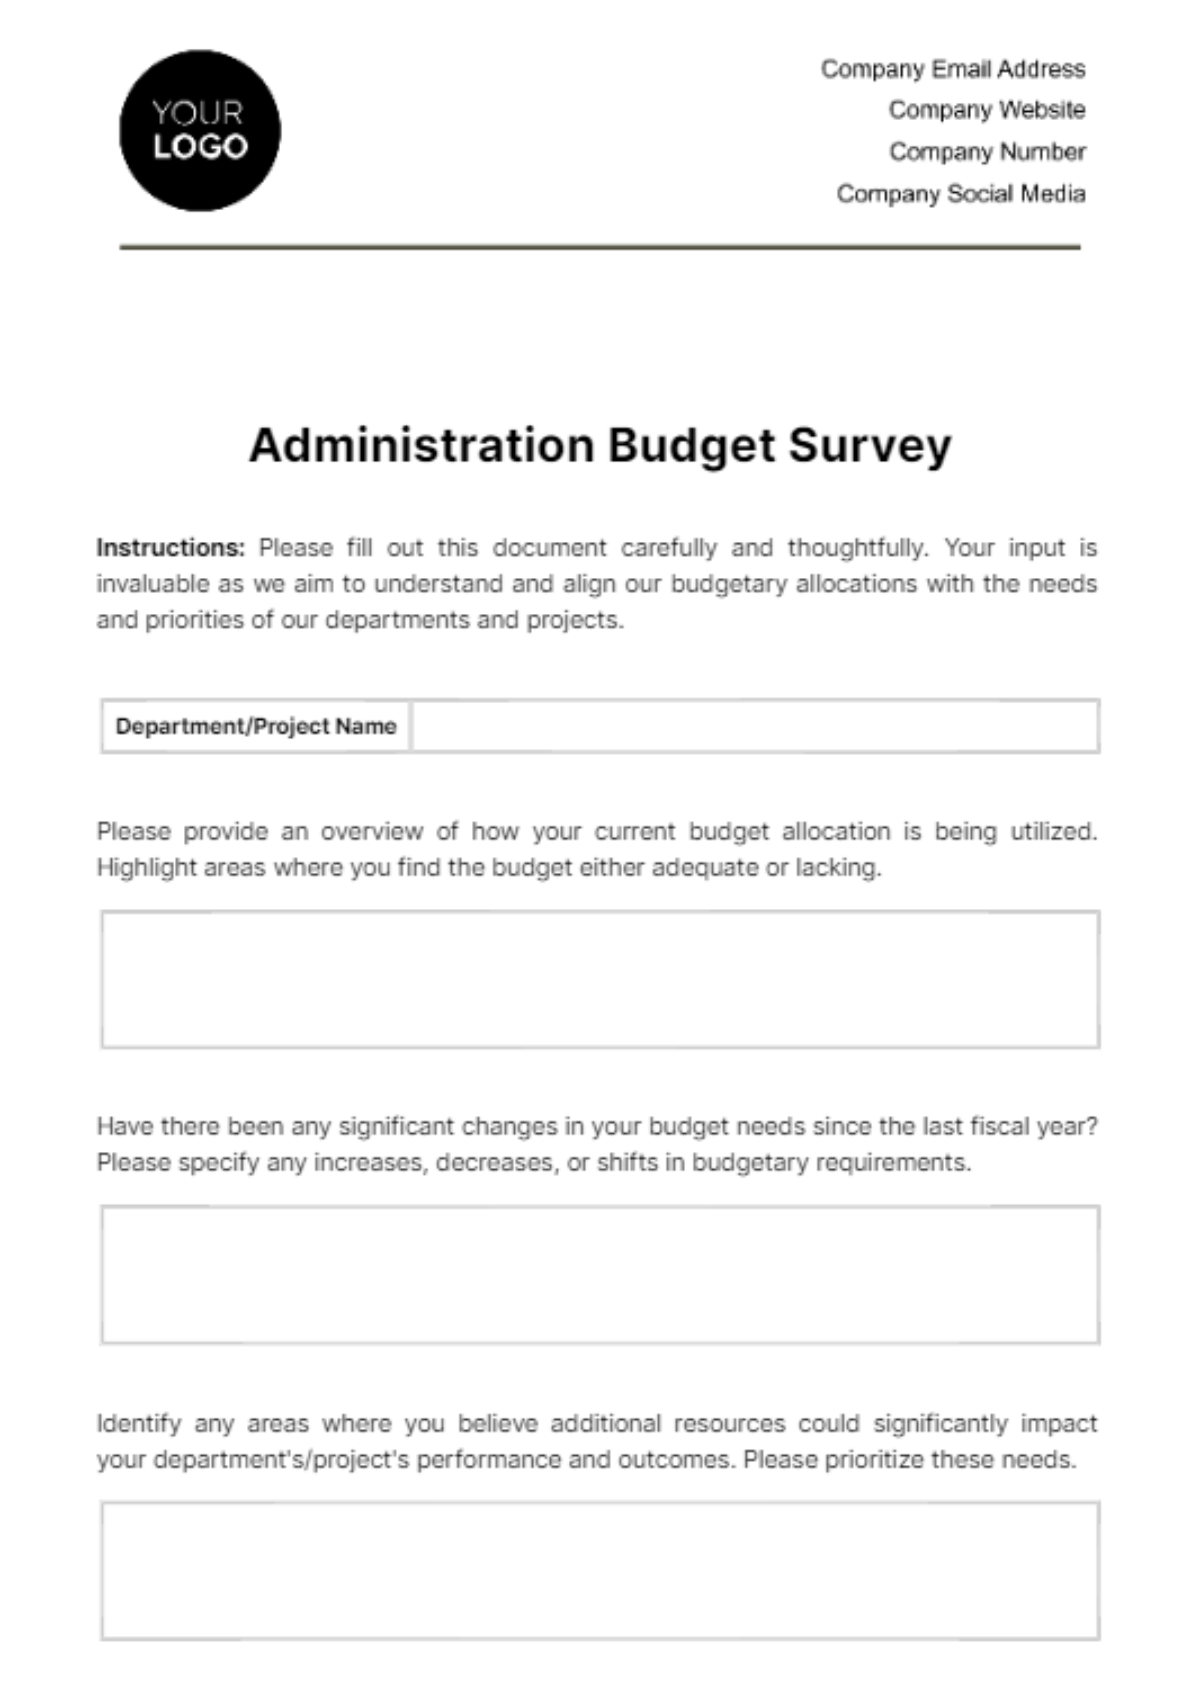 Administration Budget Survey Template